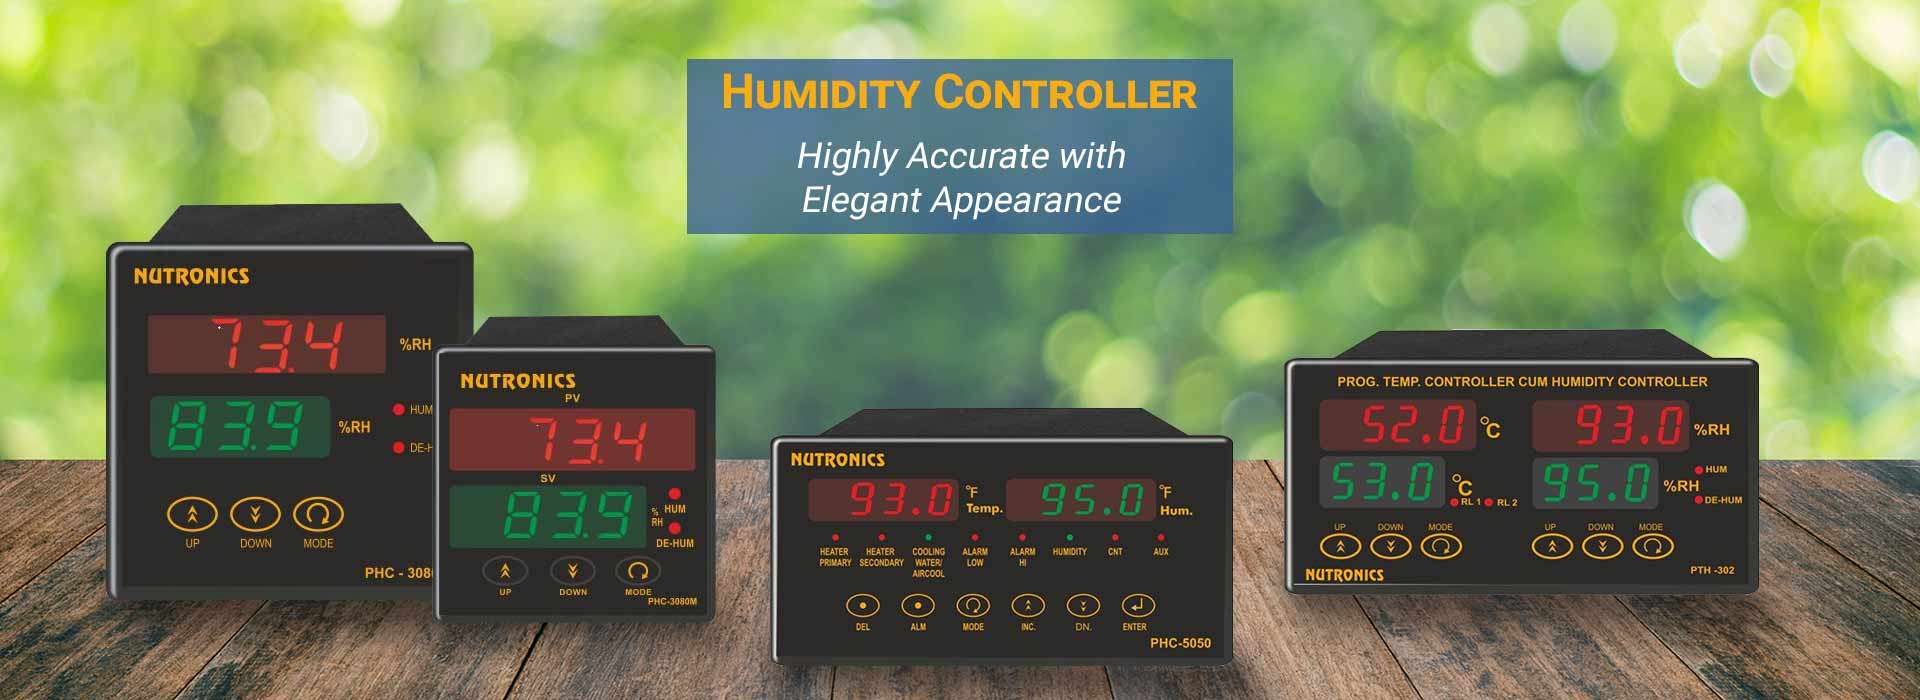  Humidity controller Manufacturers in Gurugram